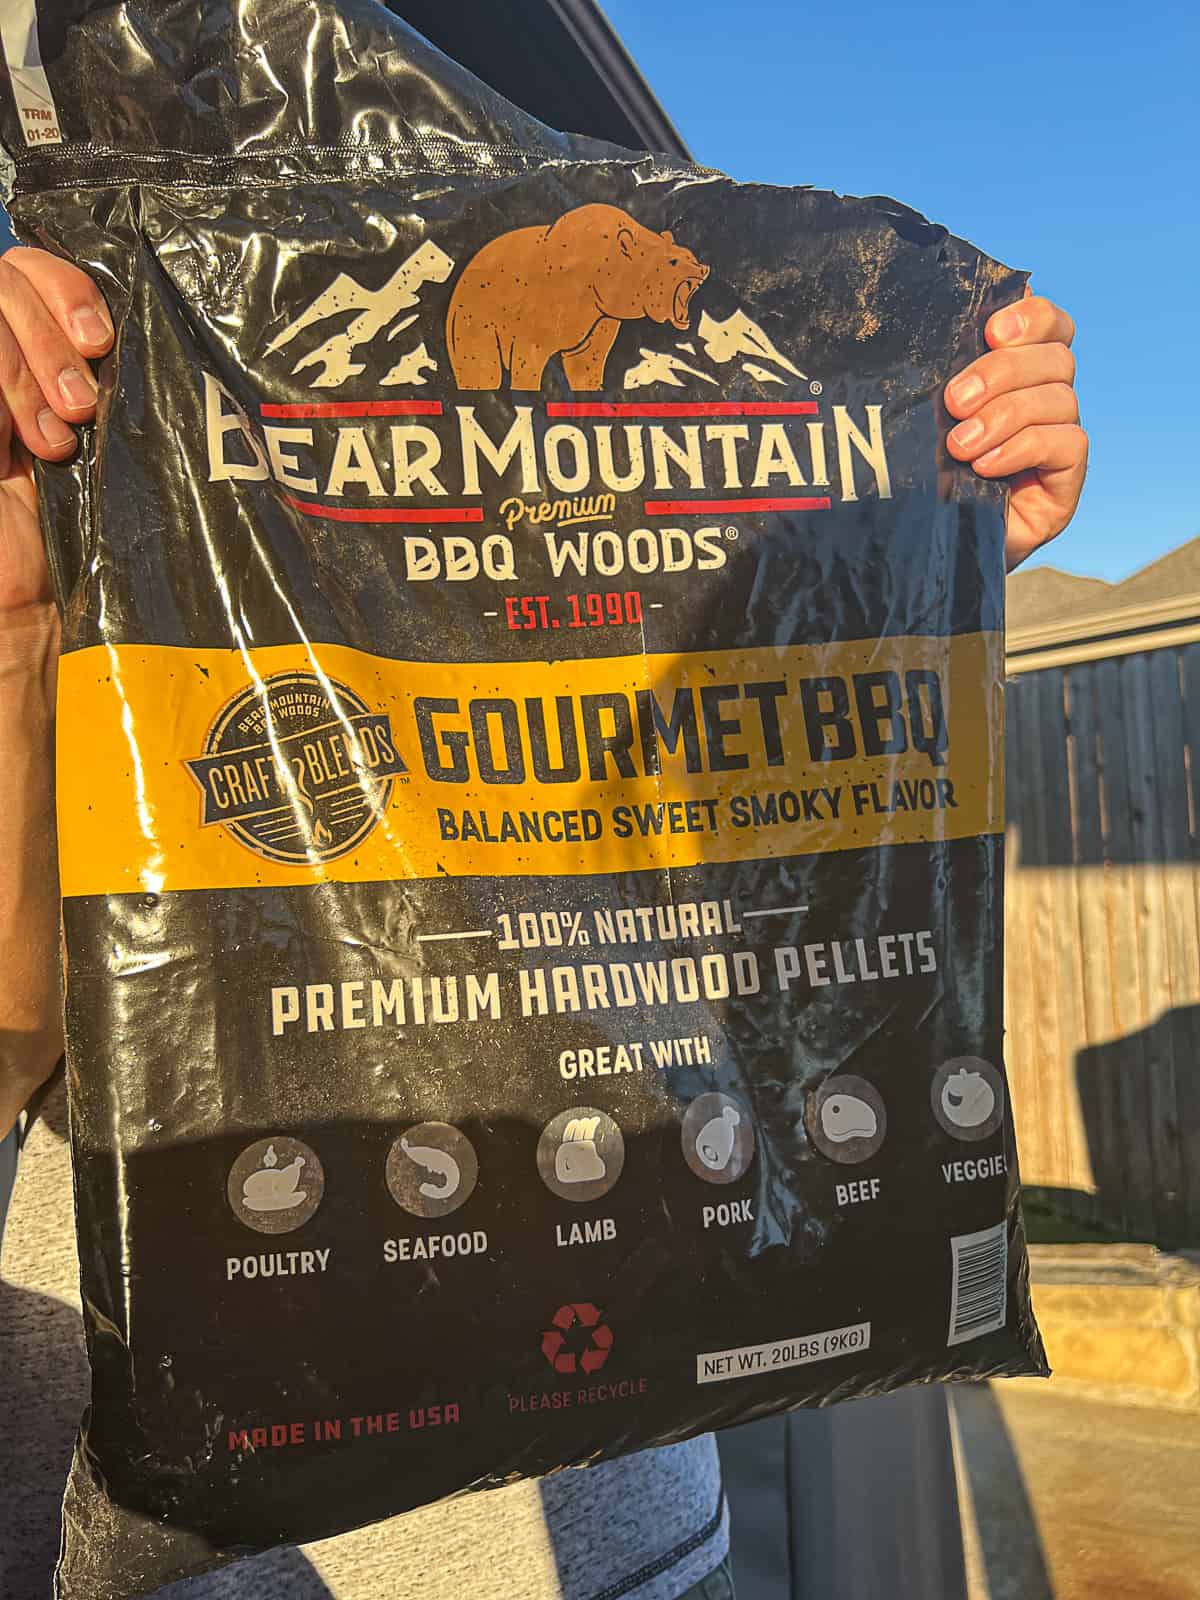 Holding Bear Mountain Pellets bag